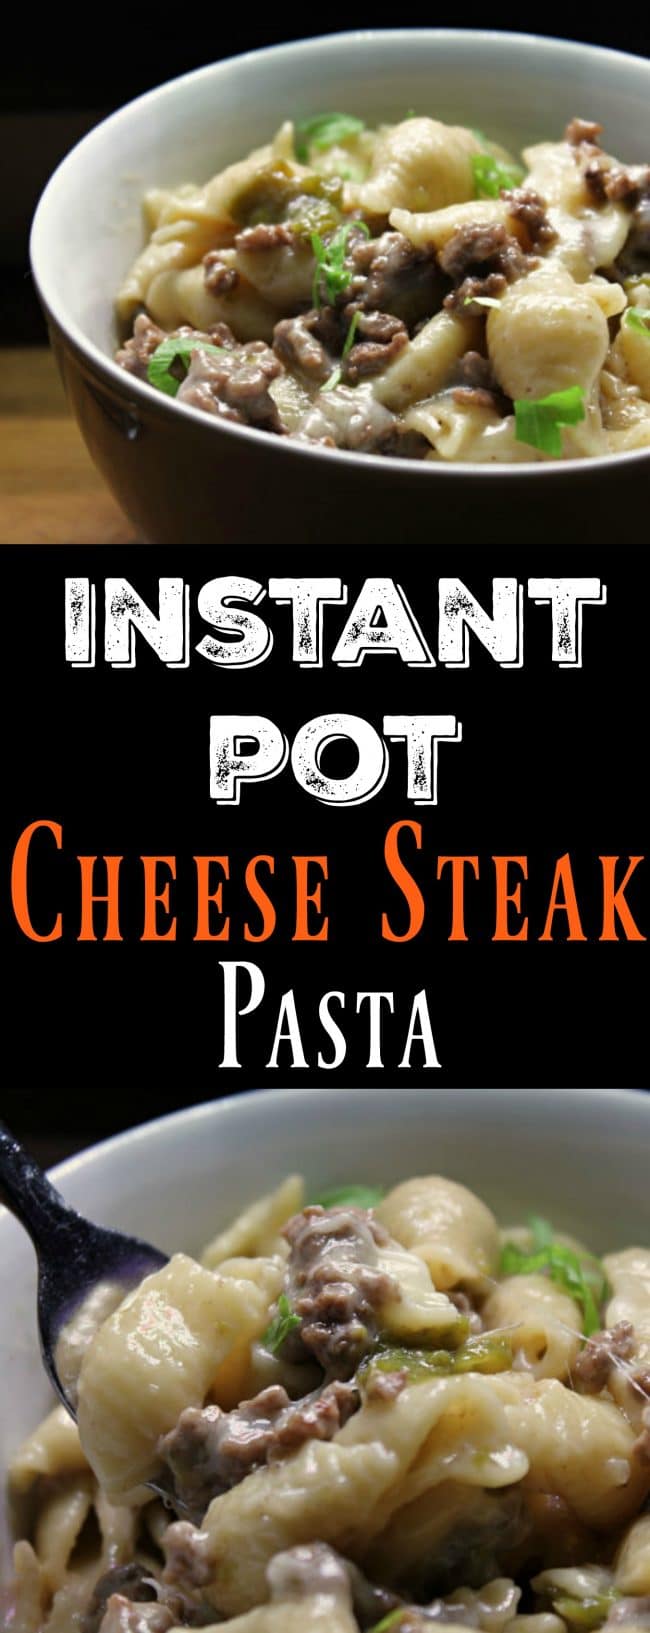 Instant Pot Cheese Steak Pasta